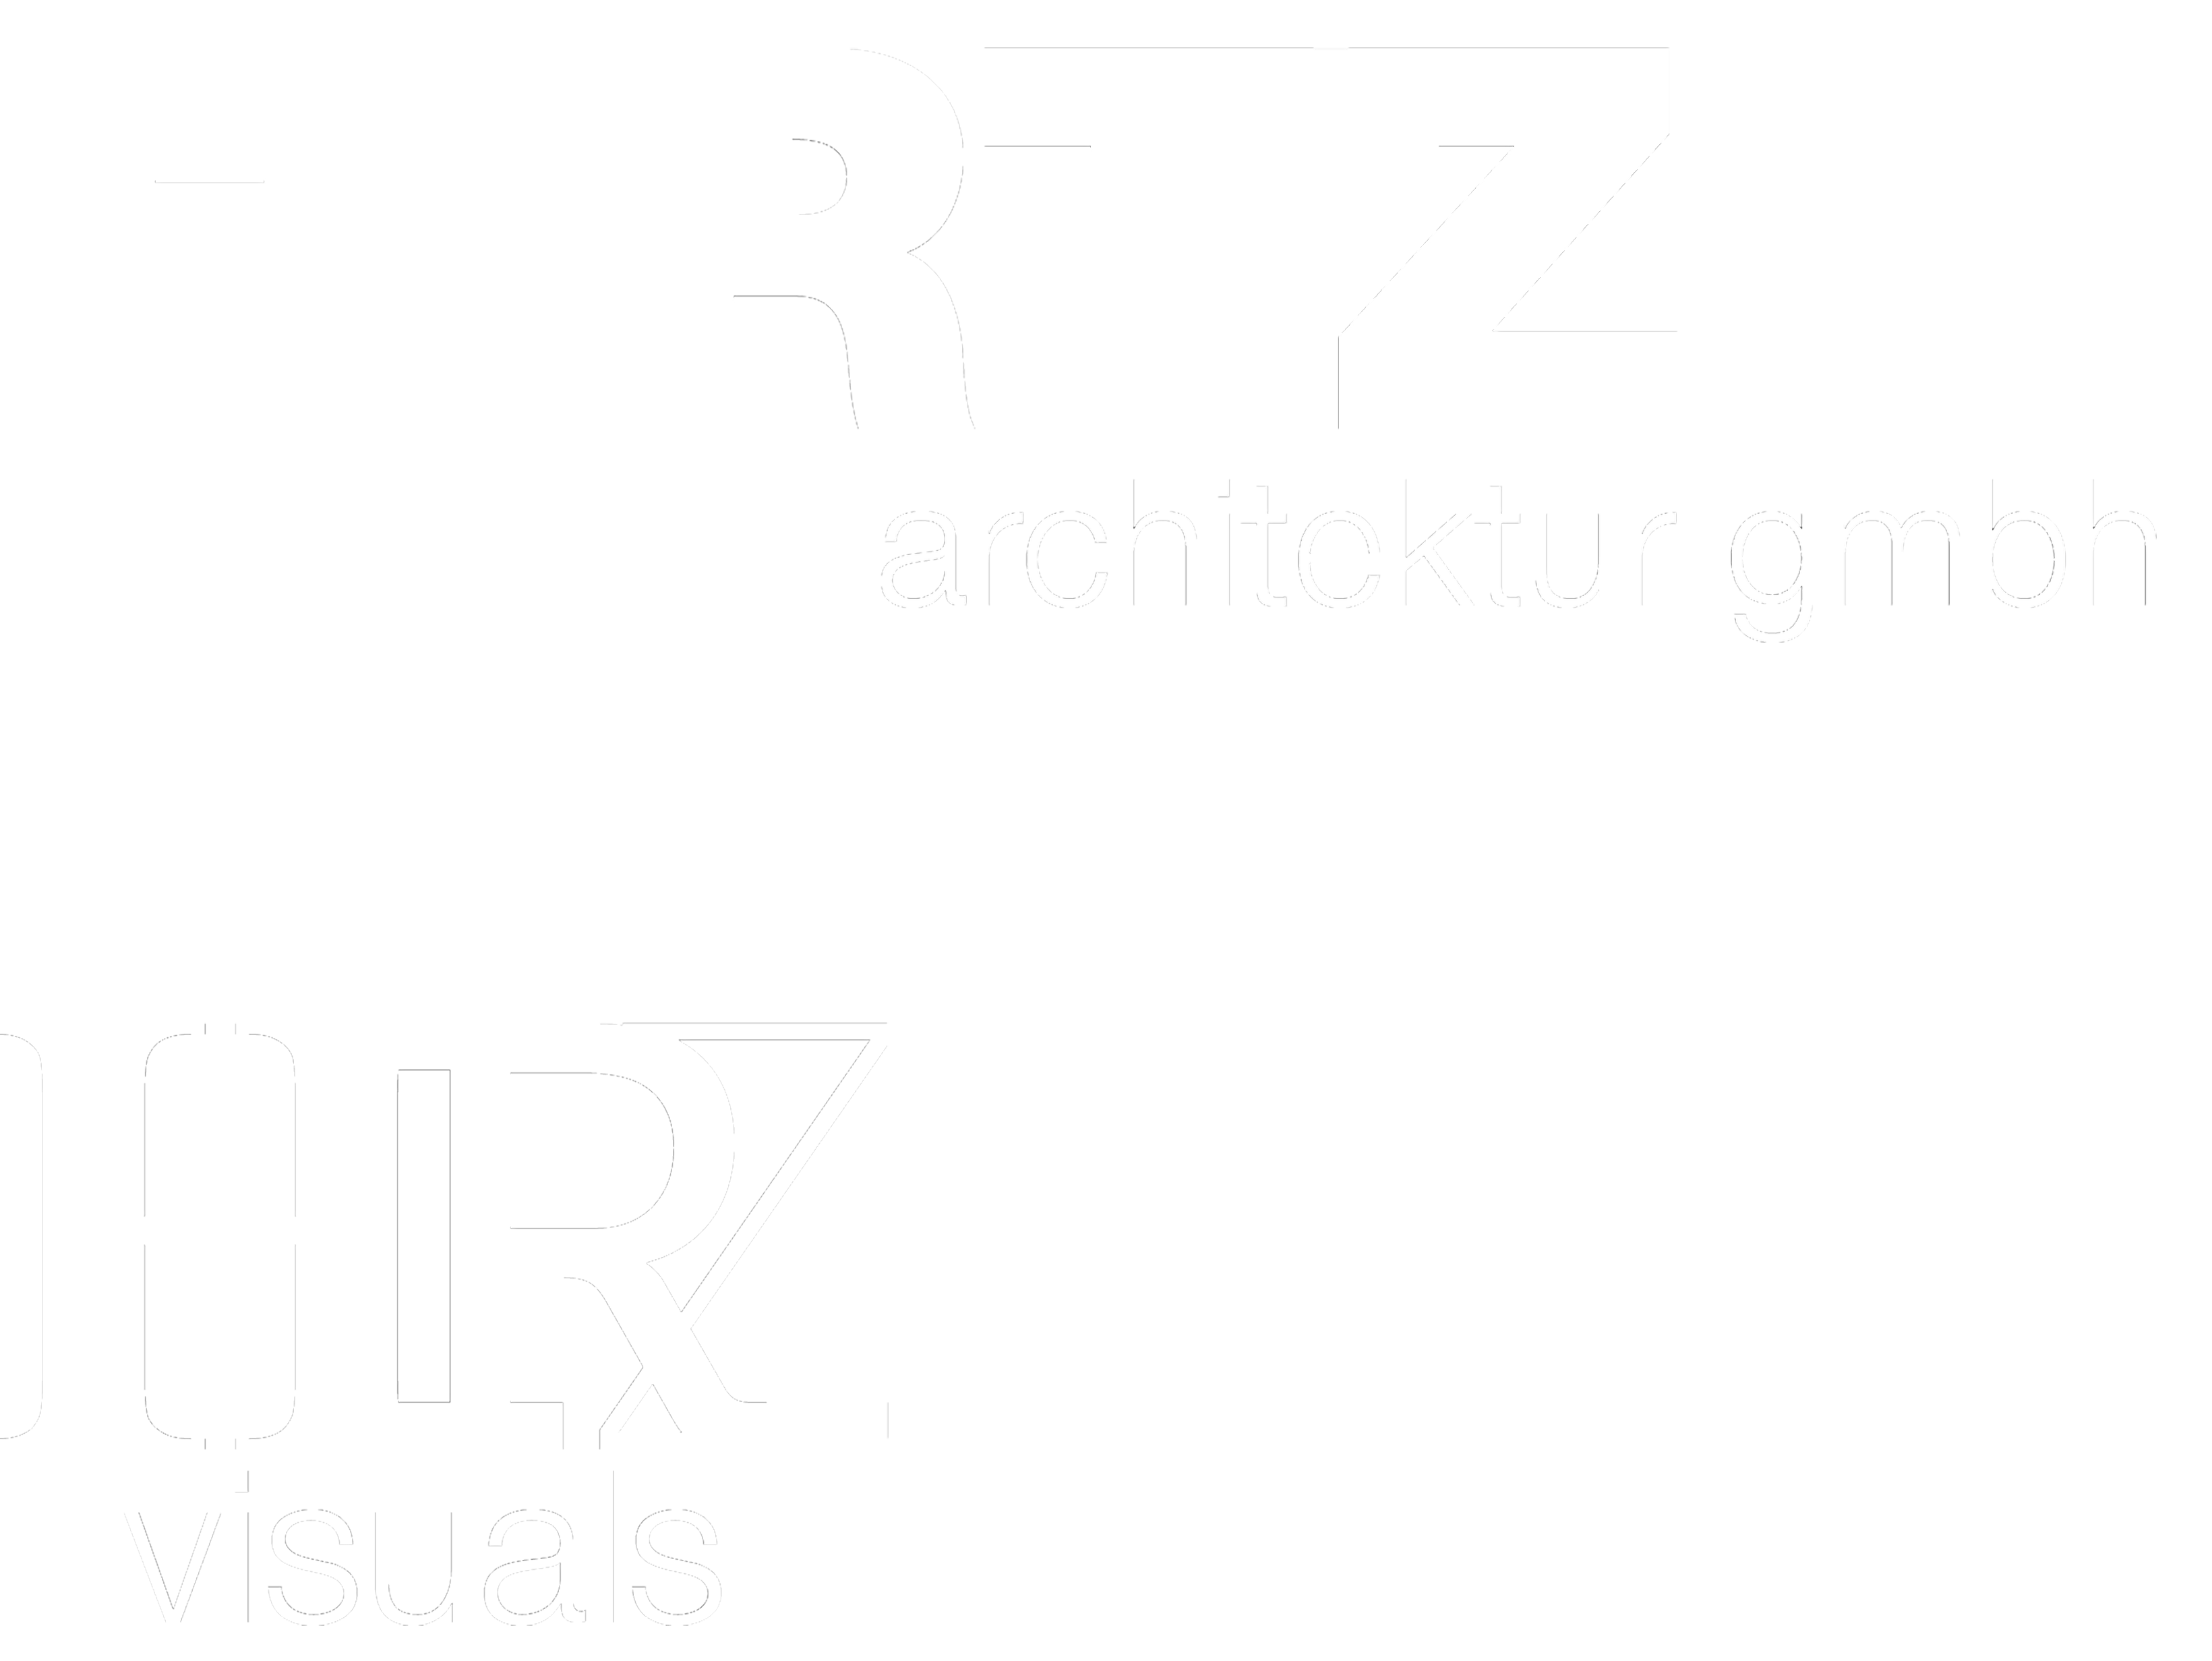 Hirtz Architektur GmbH